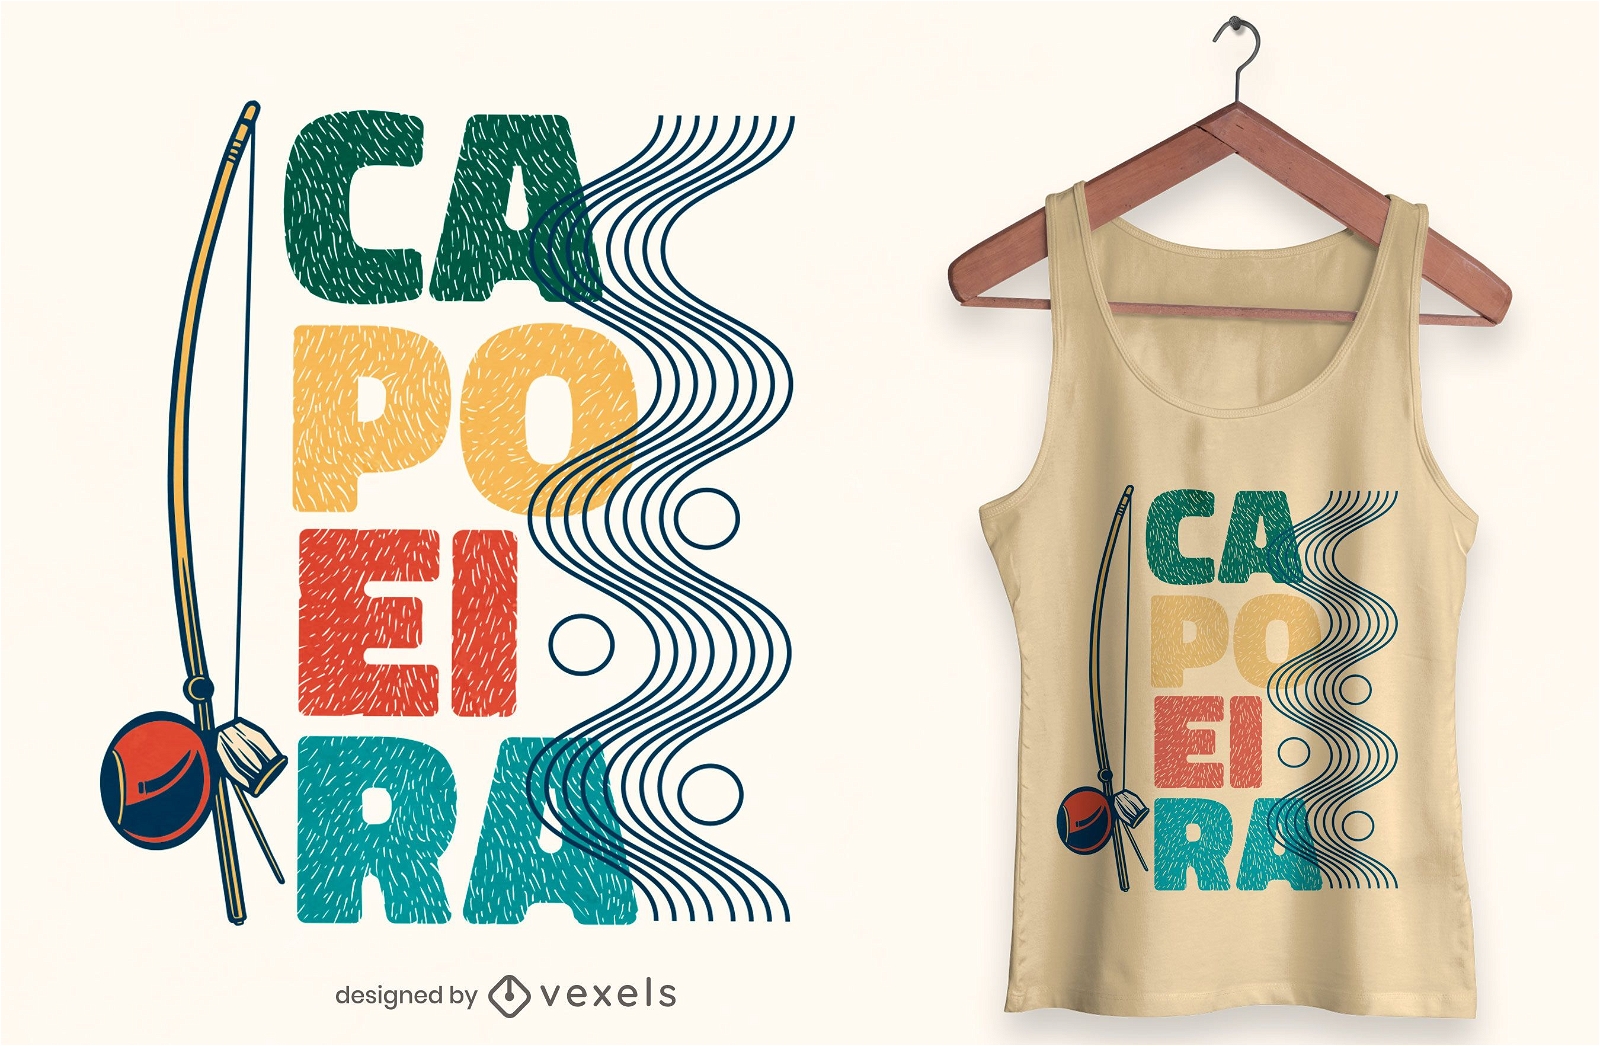 Berimbau capoeira t-shirt design